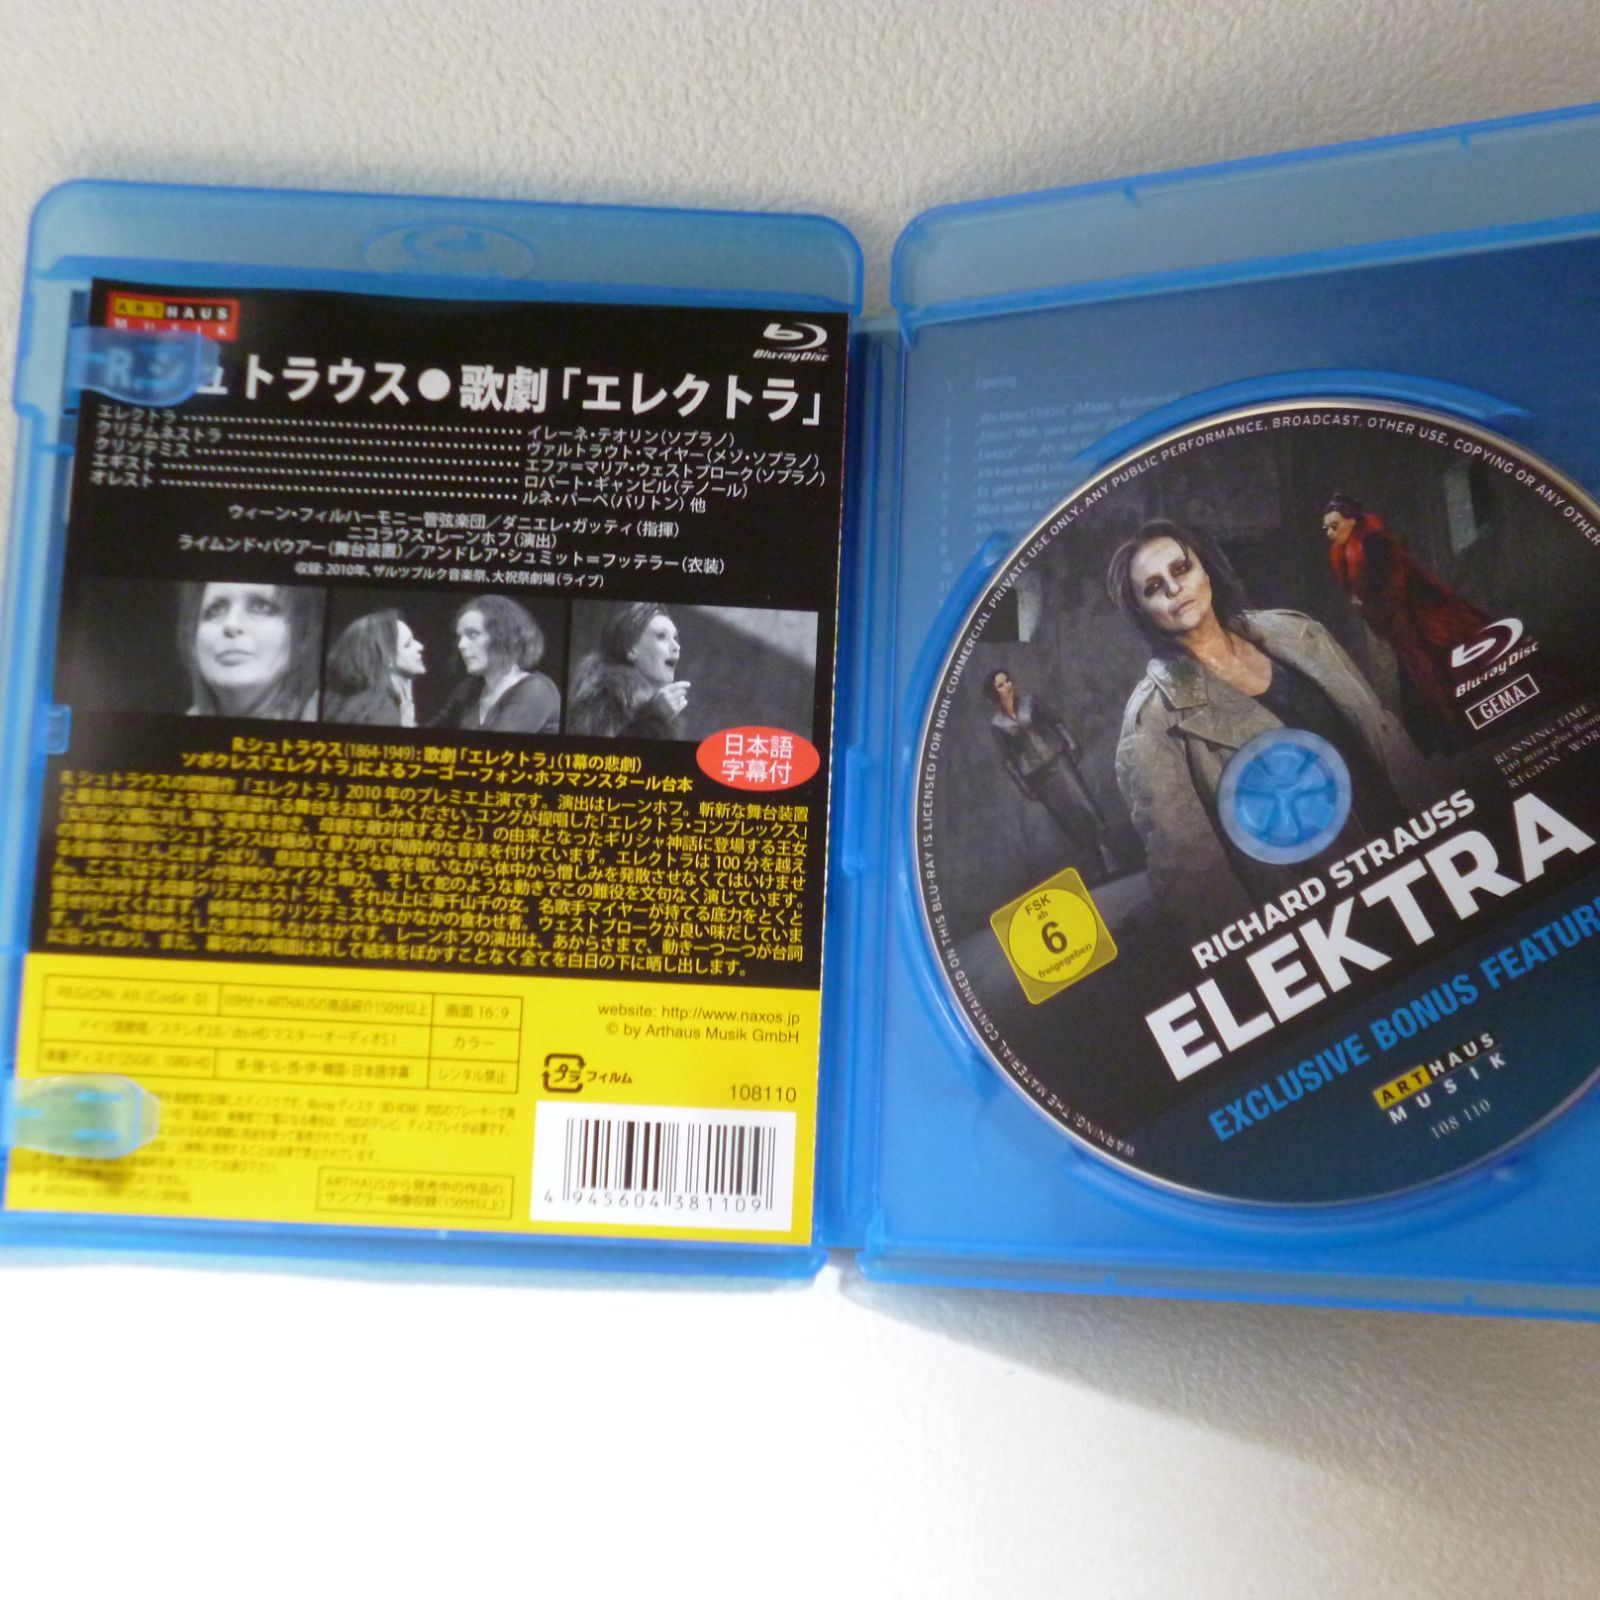 RICHARD Strauss: Elektra Special Edition Blu-ray 日本語字幕付き エレクトラ シュトラウス - メルカリ